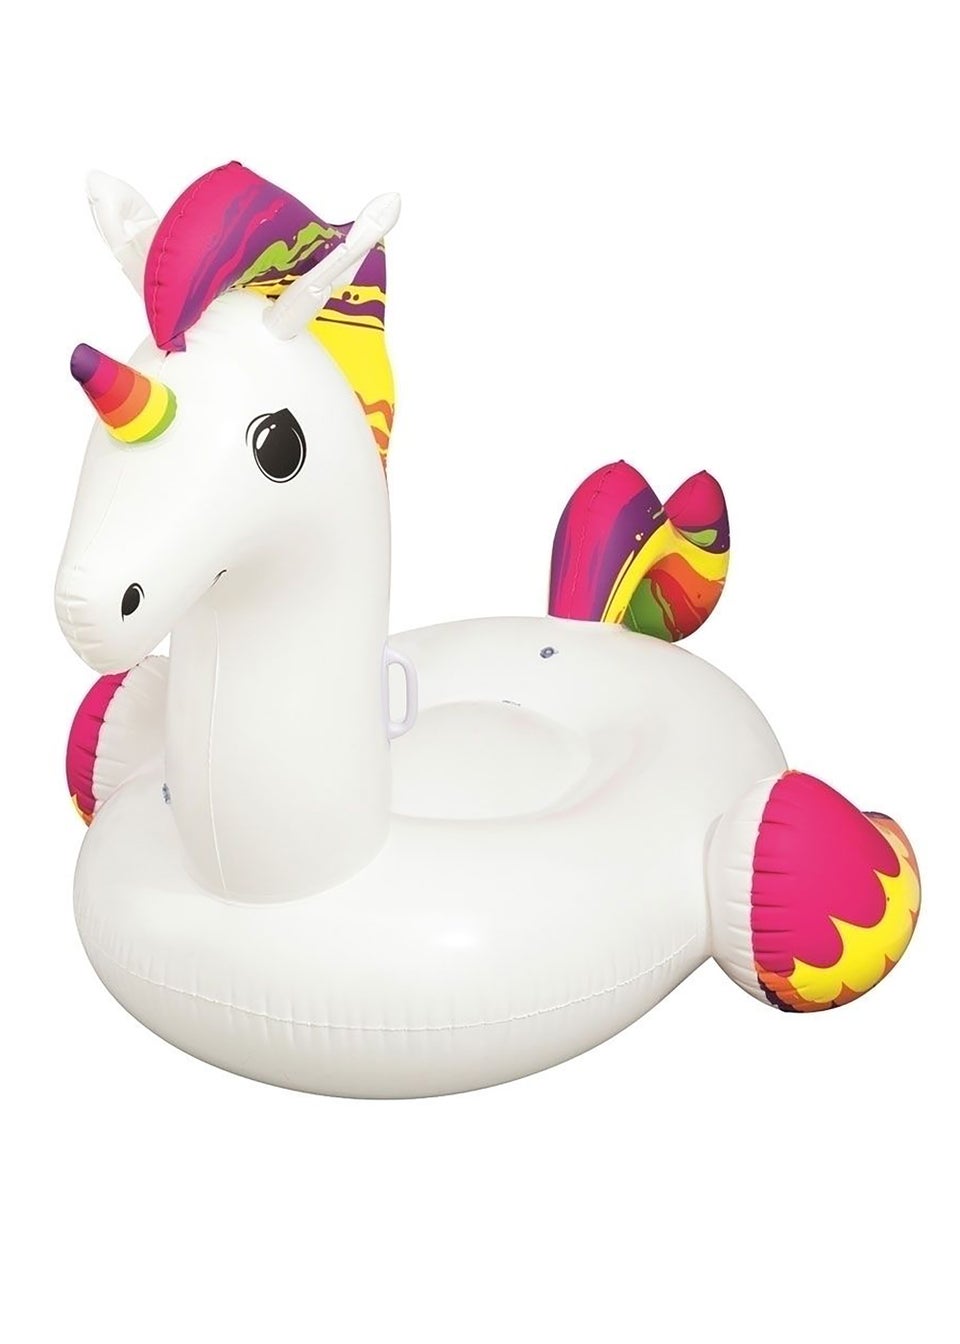 Bestway Supersized Unicorn Ride On (233cm x 156cm x 136.5cm)